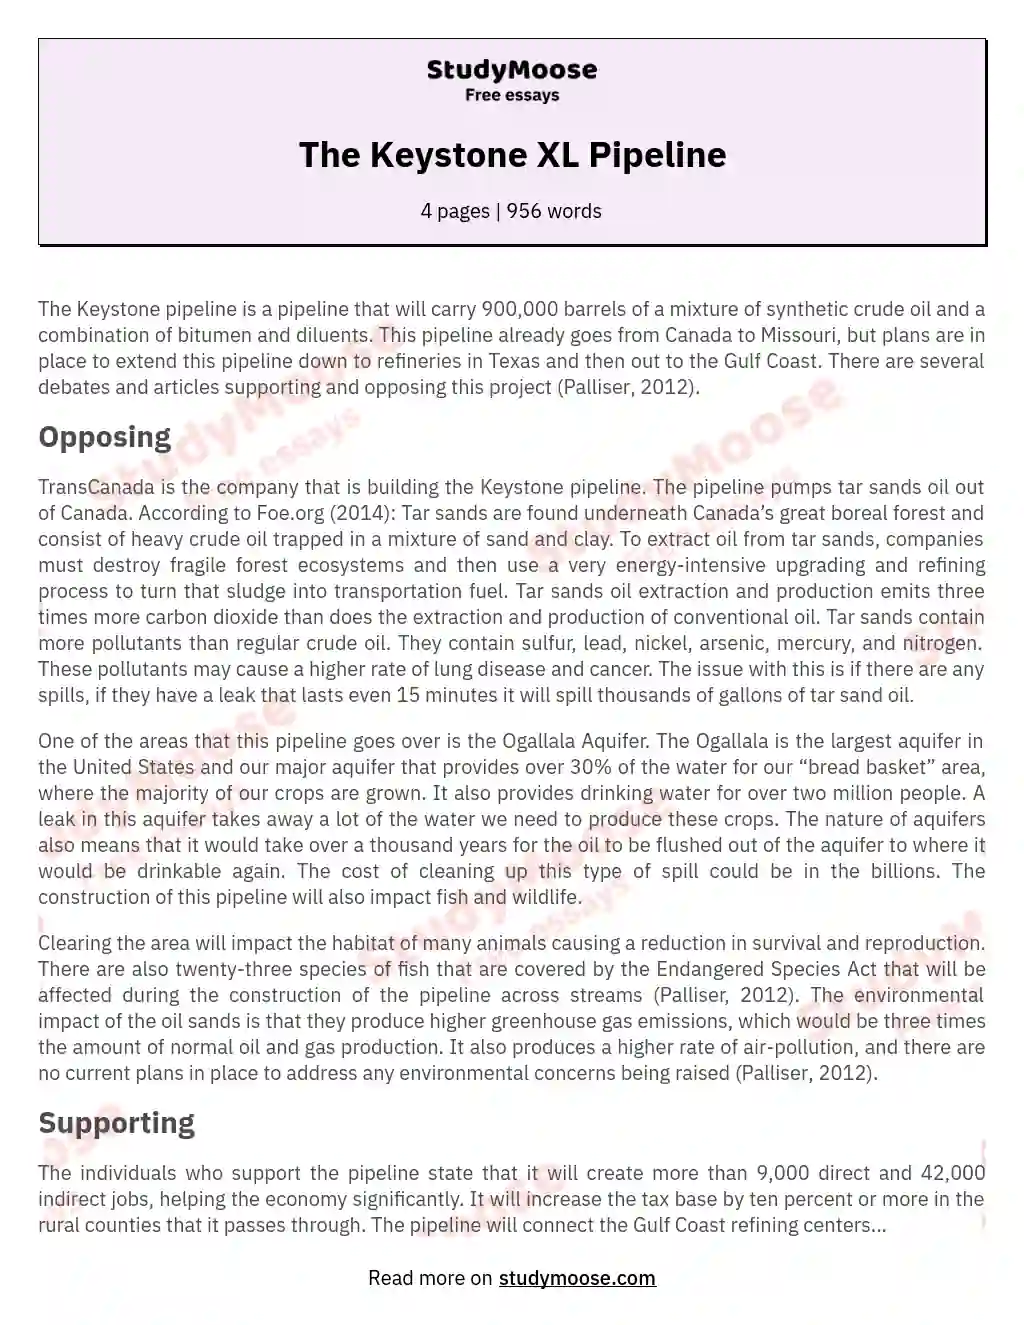 The Keystone XL Pipeline essay